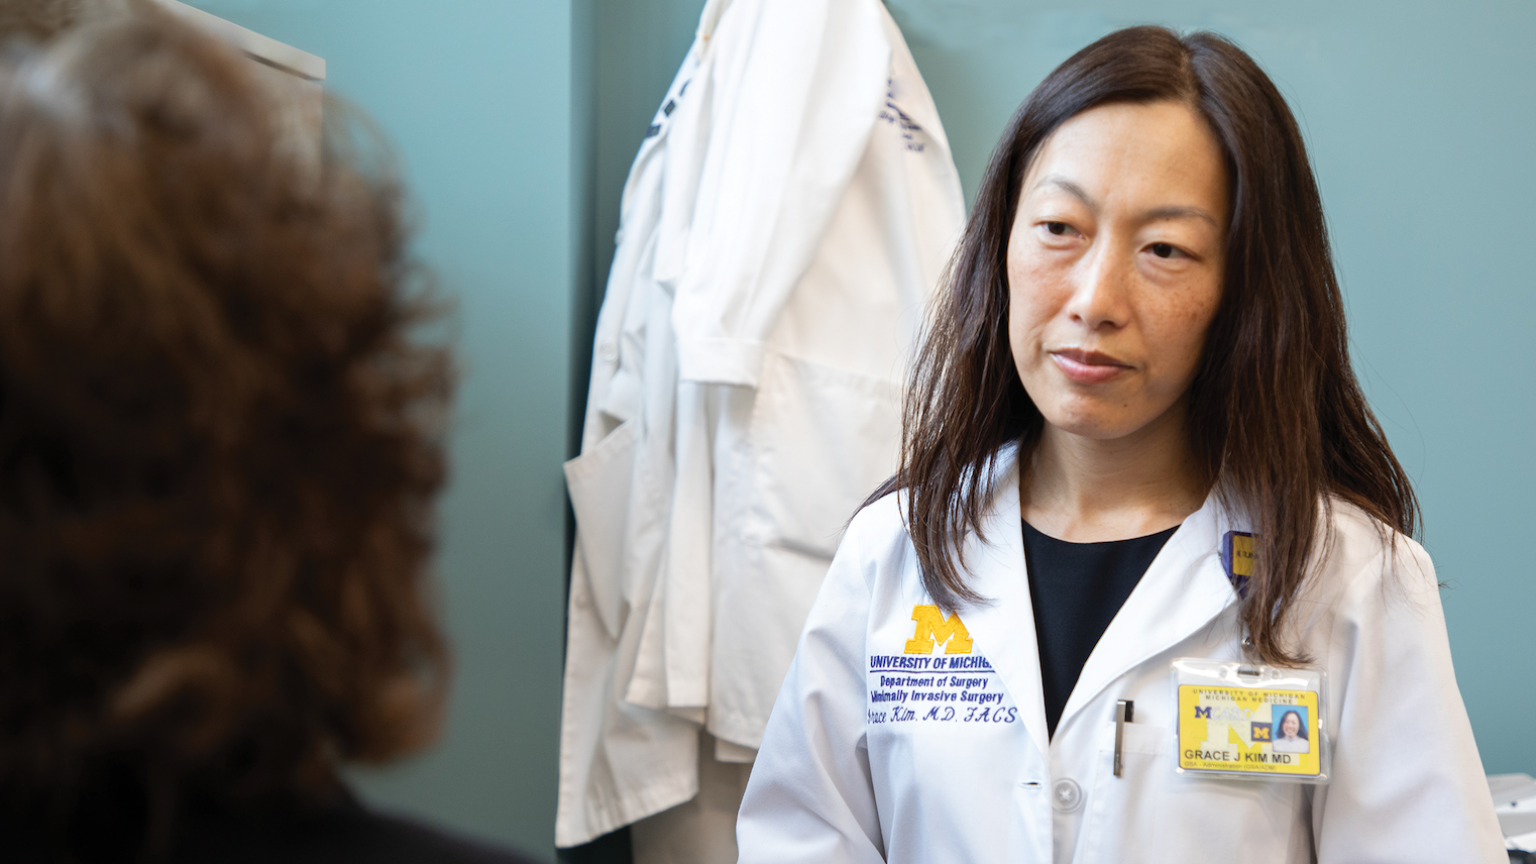 Dr. Grace Kim listening to a patient